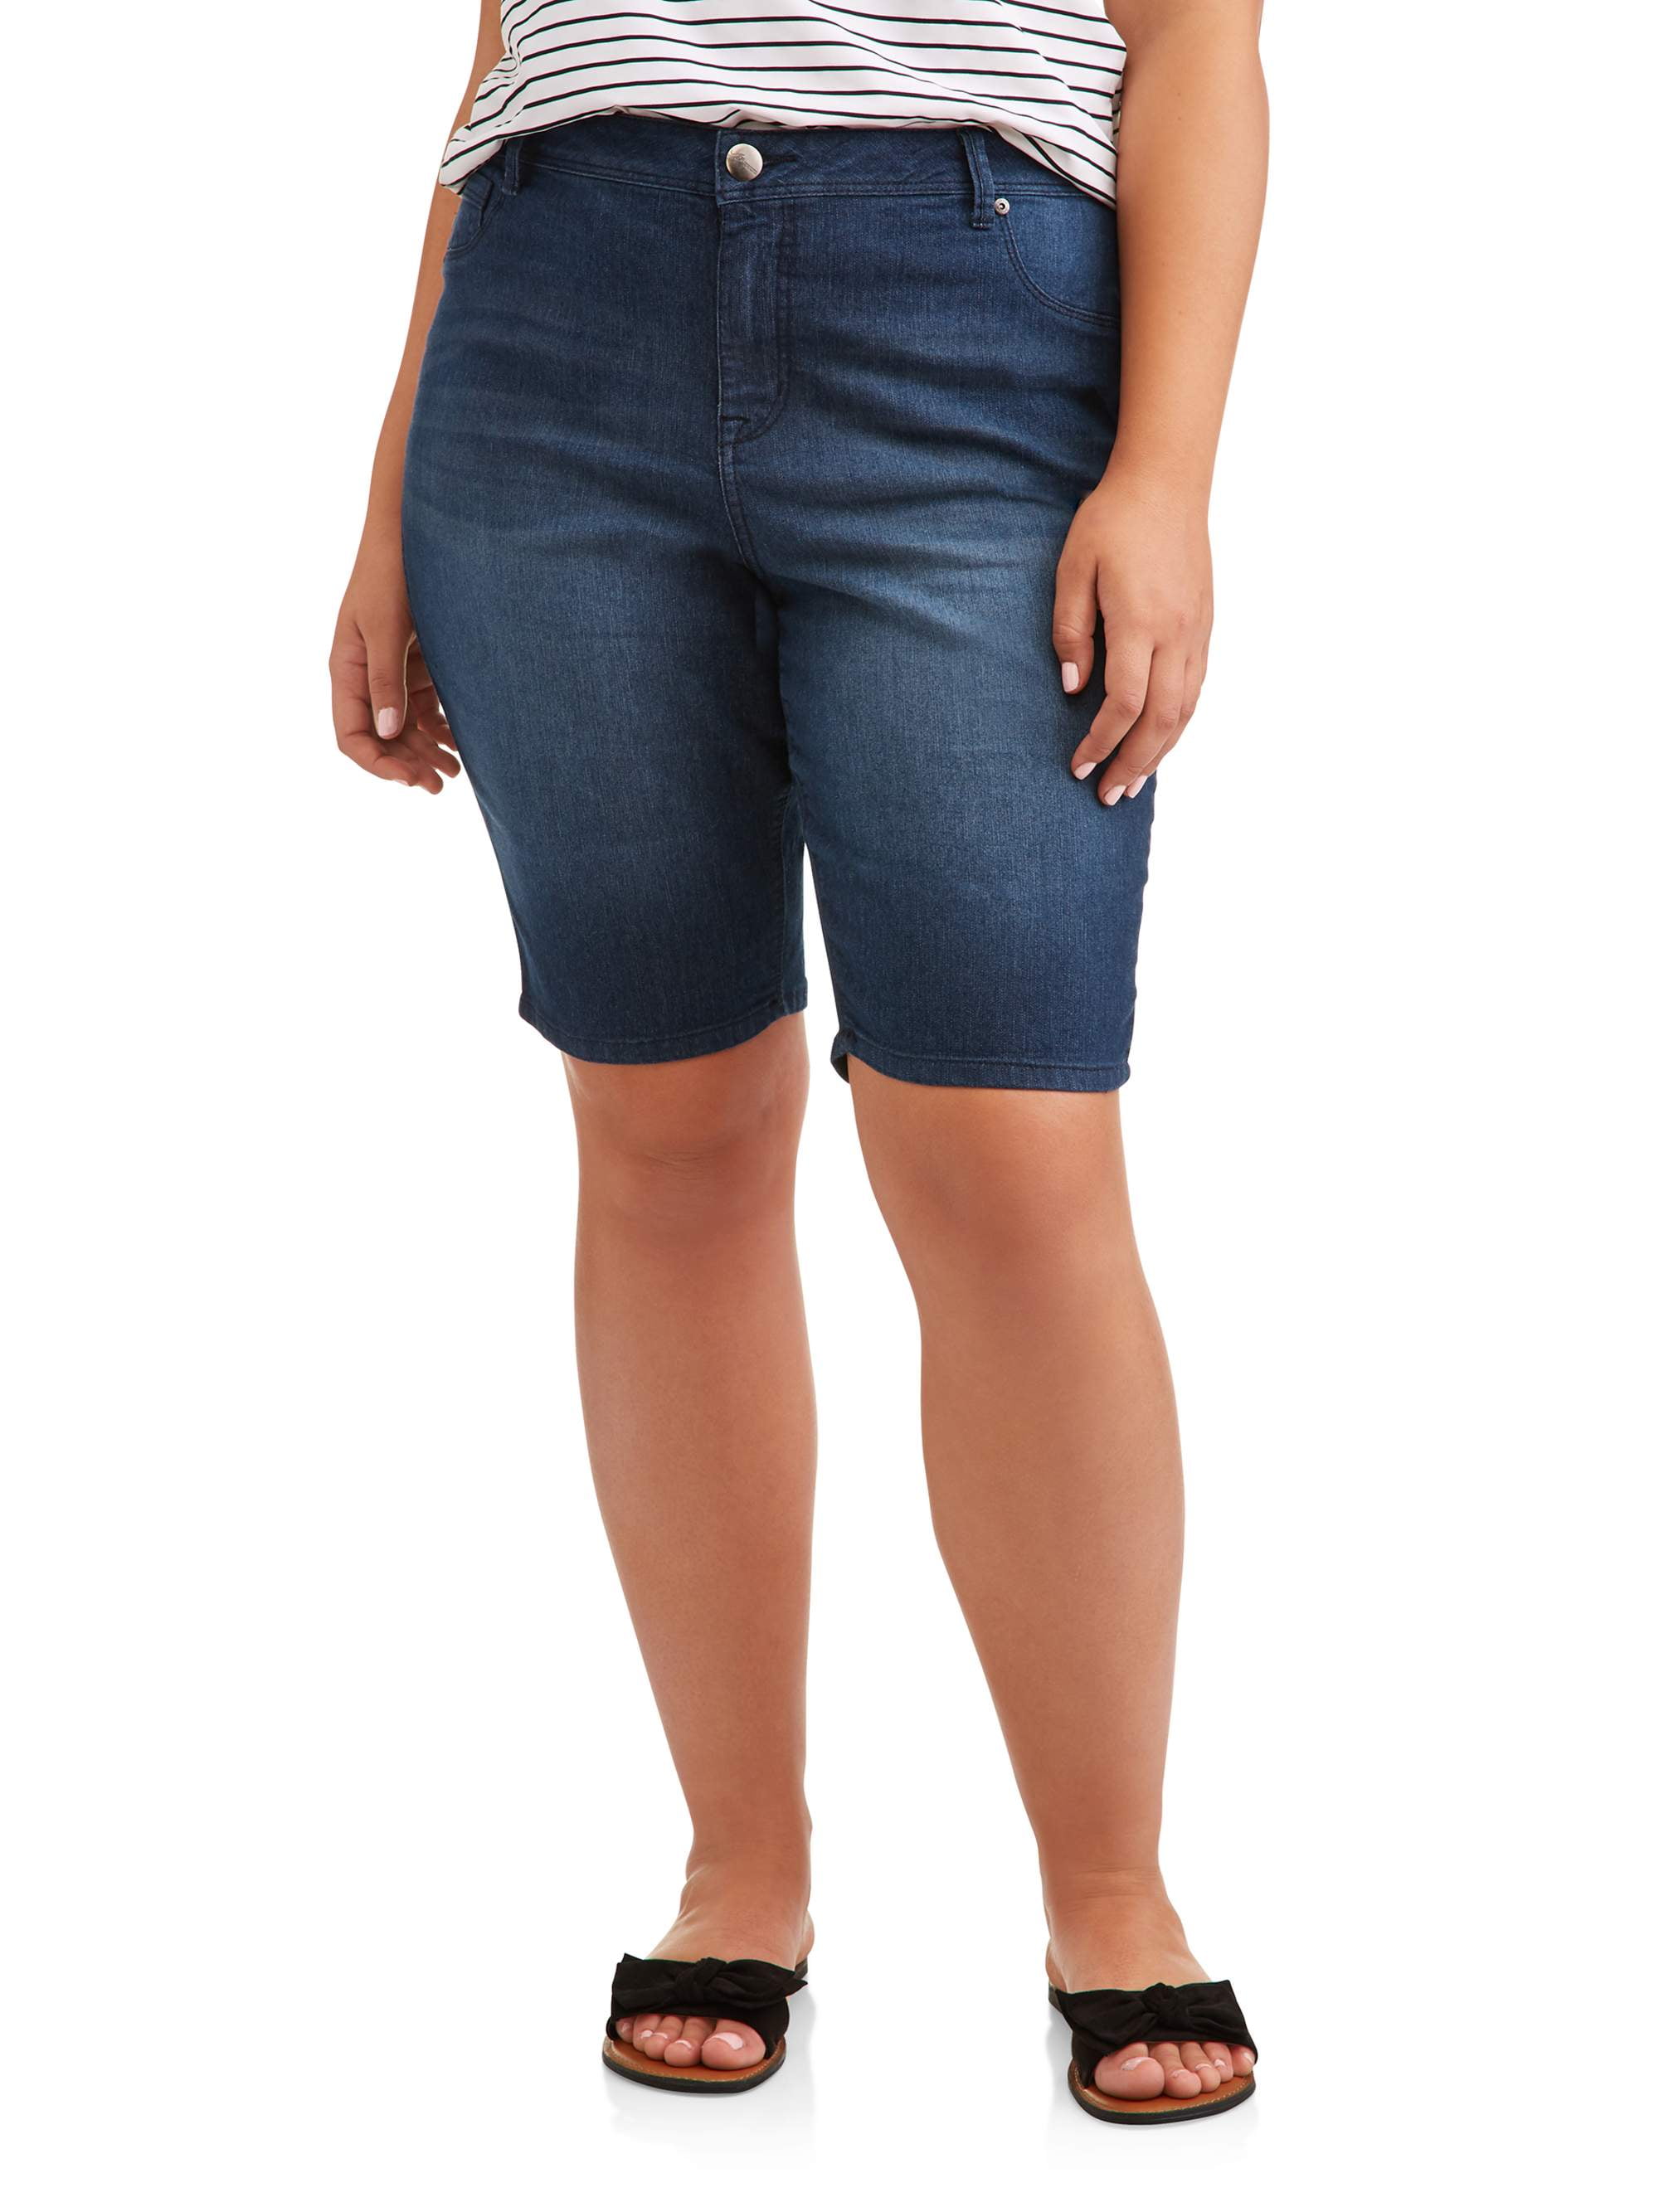 A Denim Women S Plus Size Basic Bermuda Shorts Walmart